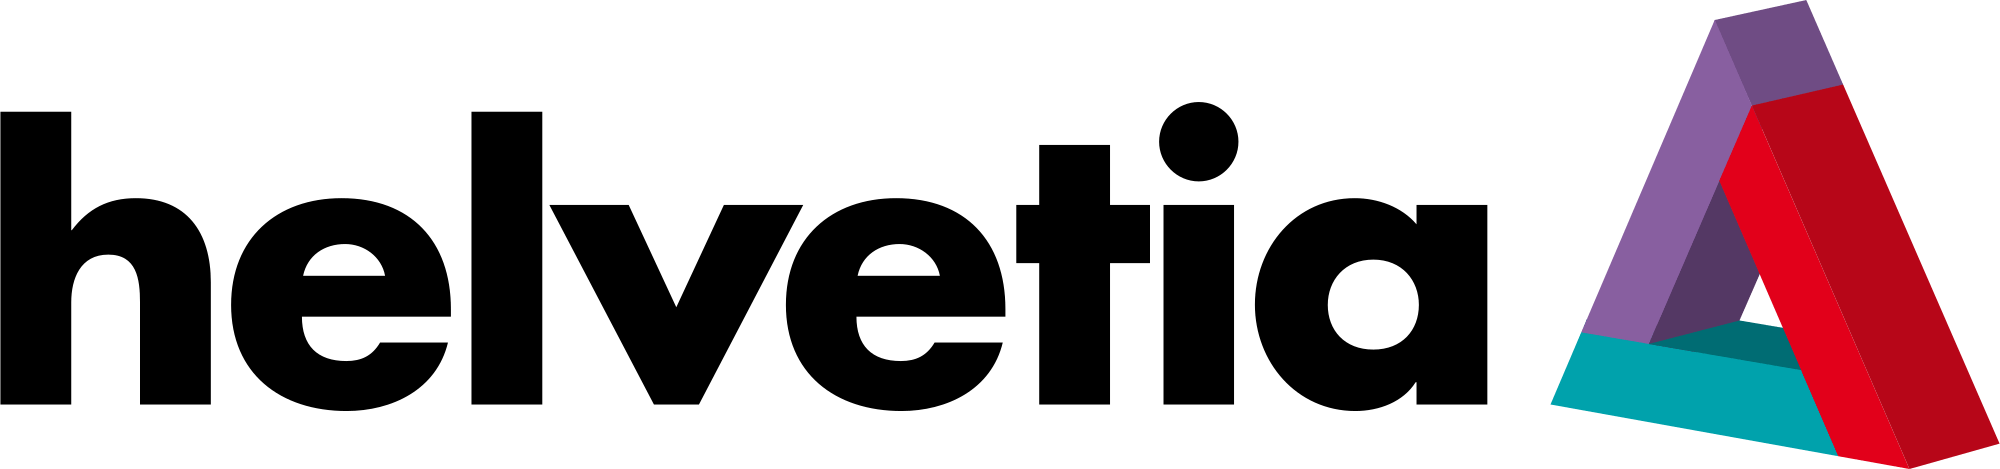 Helvetia_(Versicherung)_logo.svg